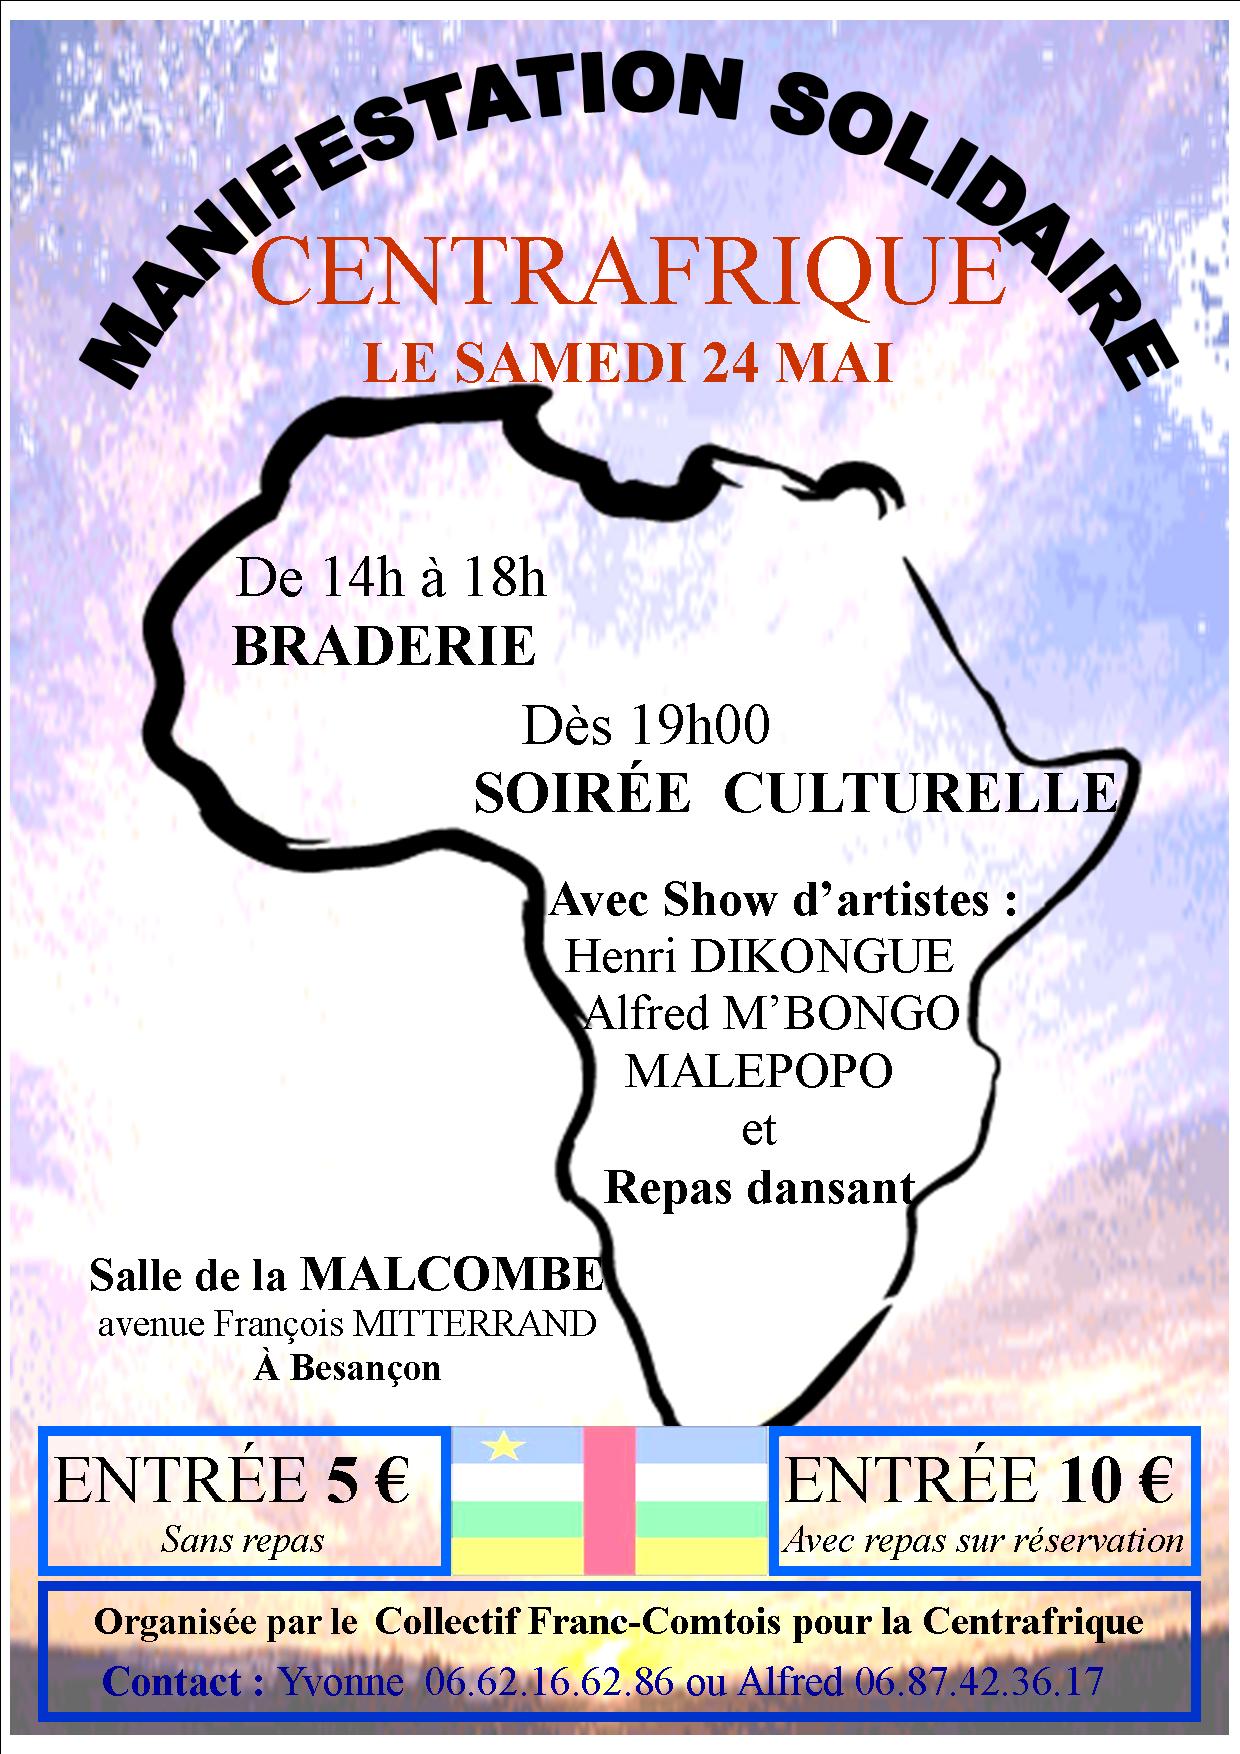 Manifestation Solidaire Centrafrique